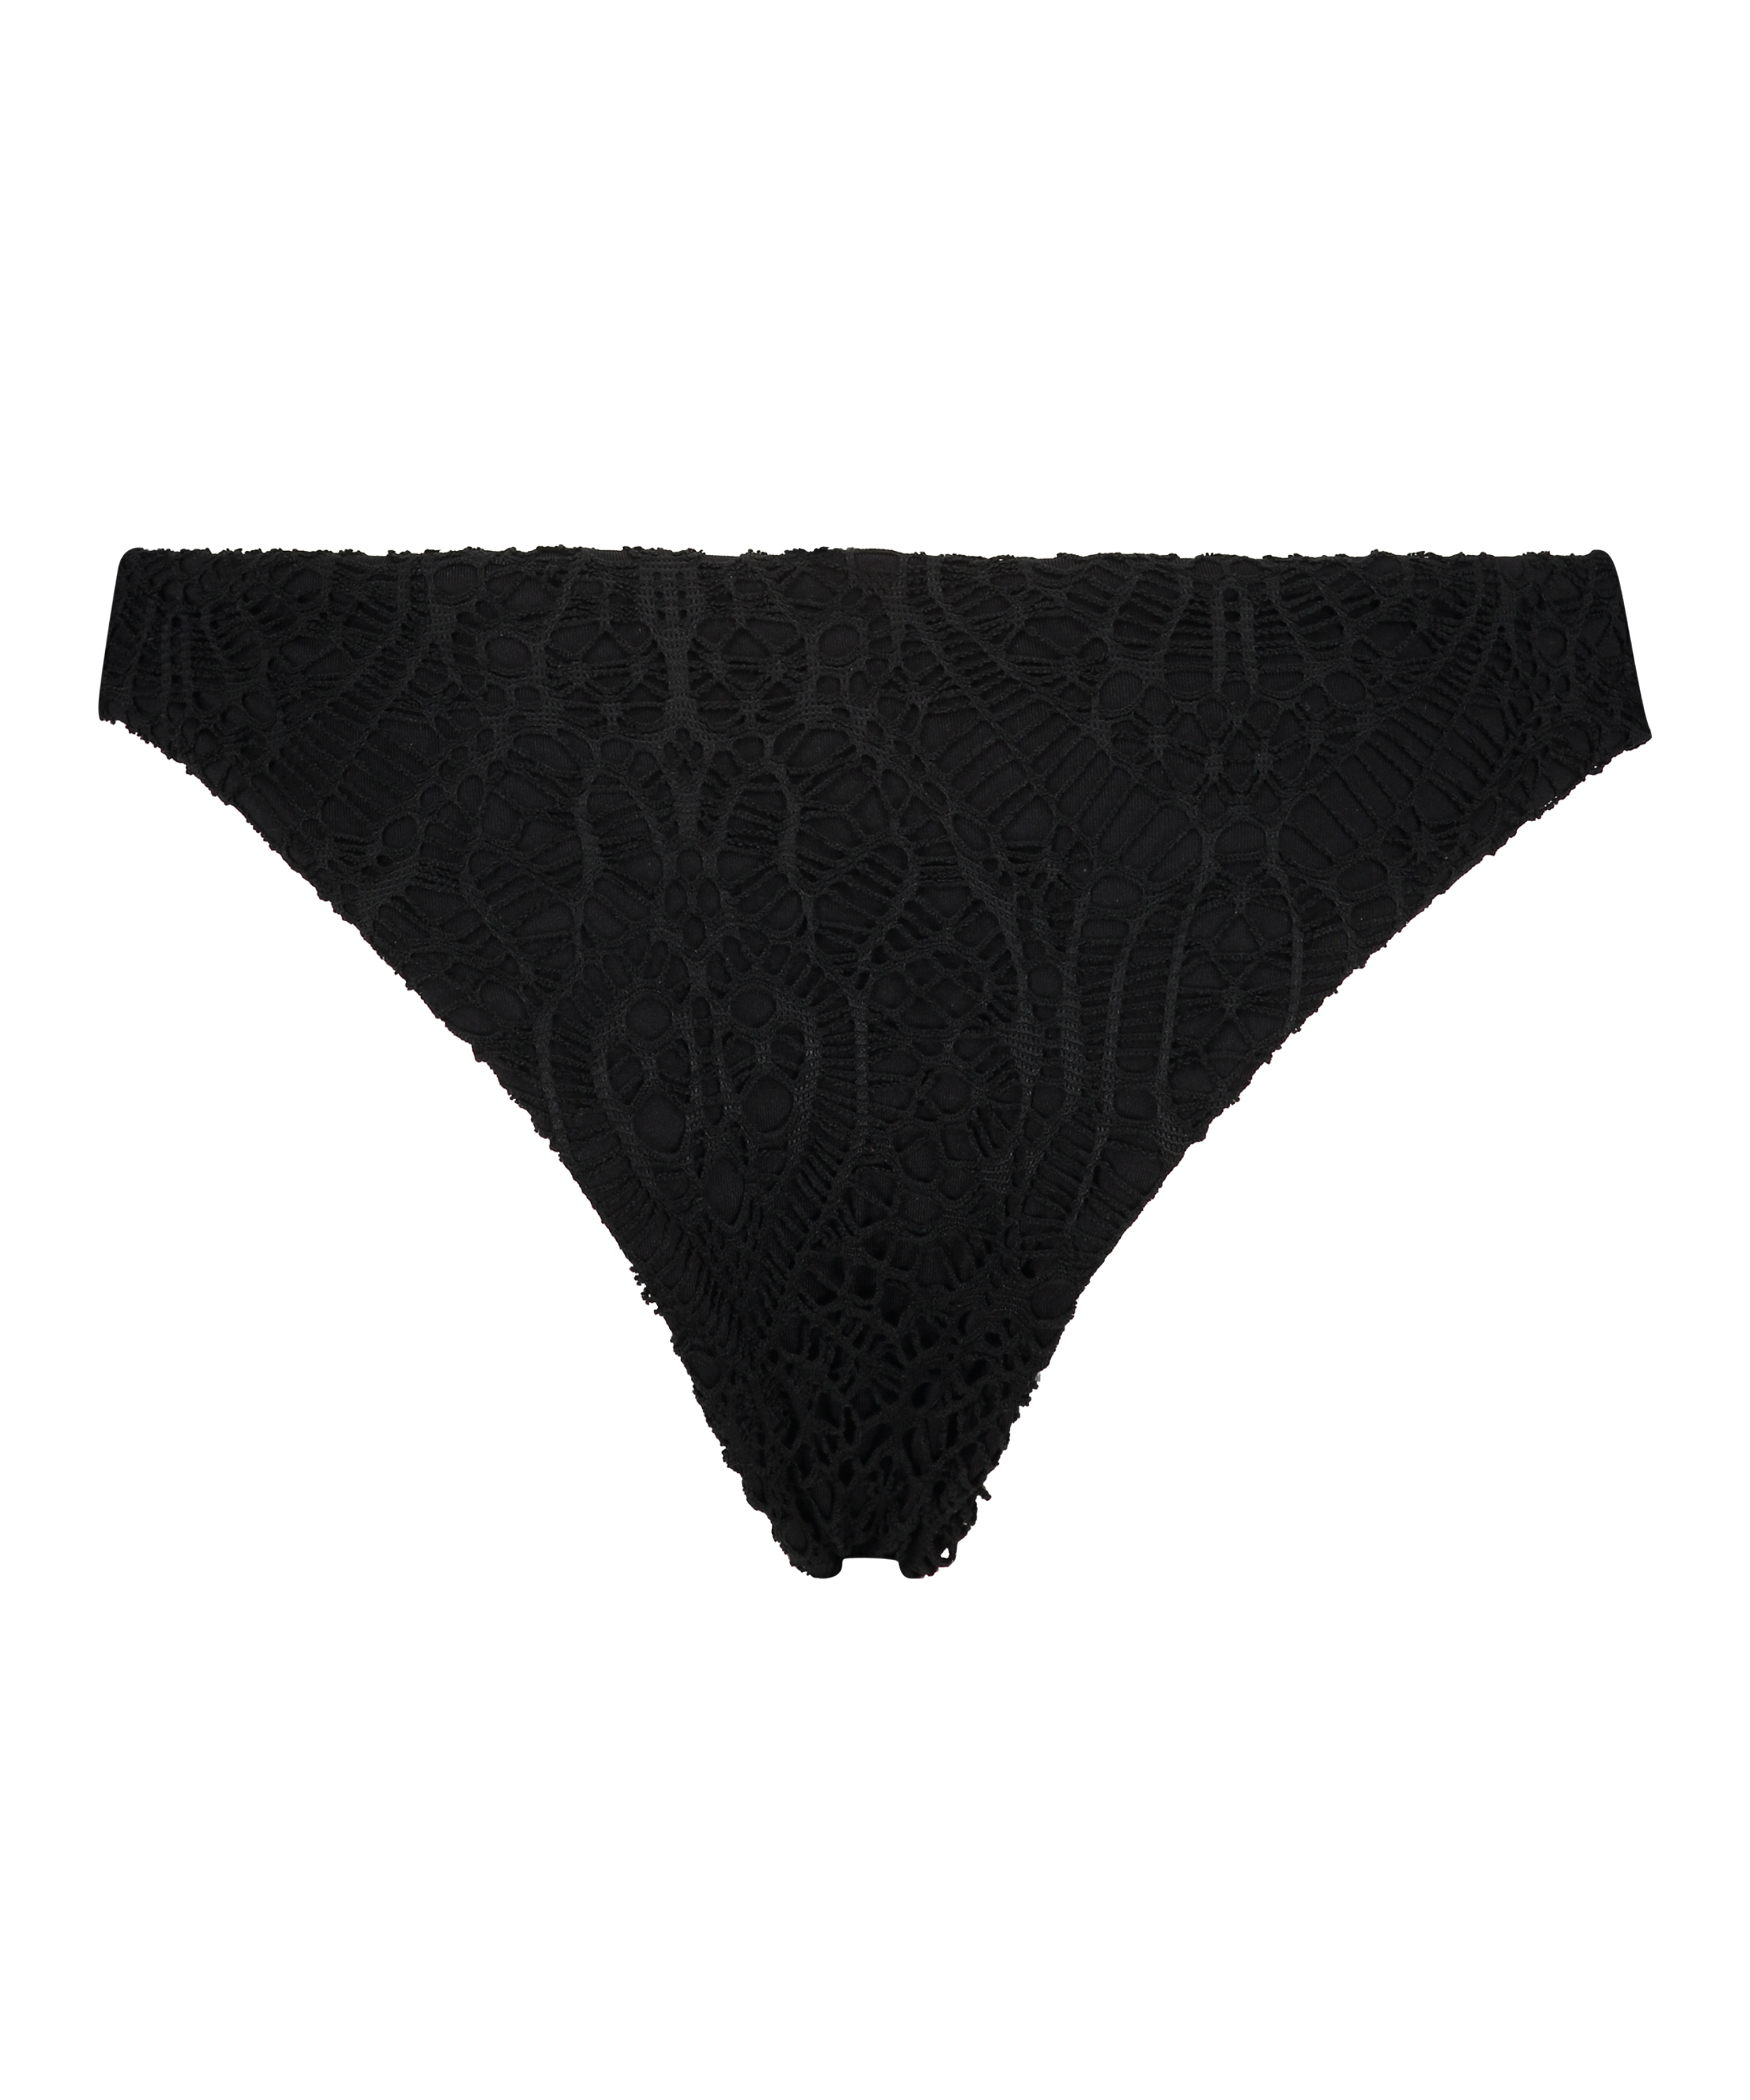 Crochet Brazilian bikini bottoms, Black, main